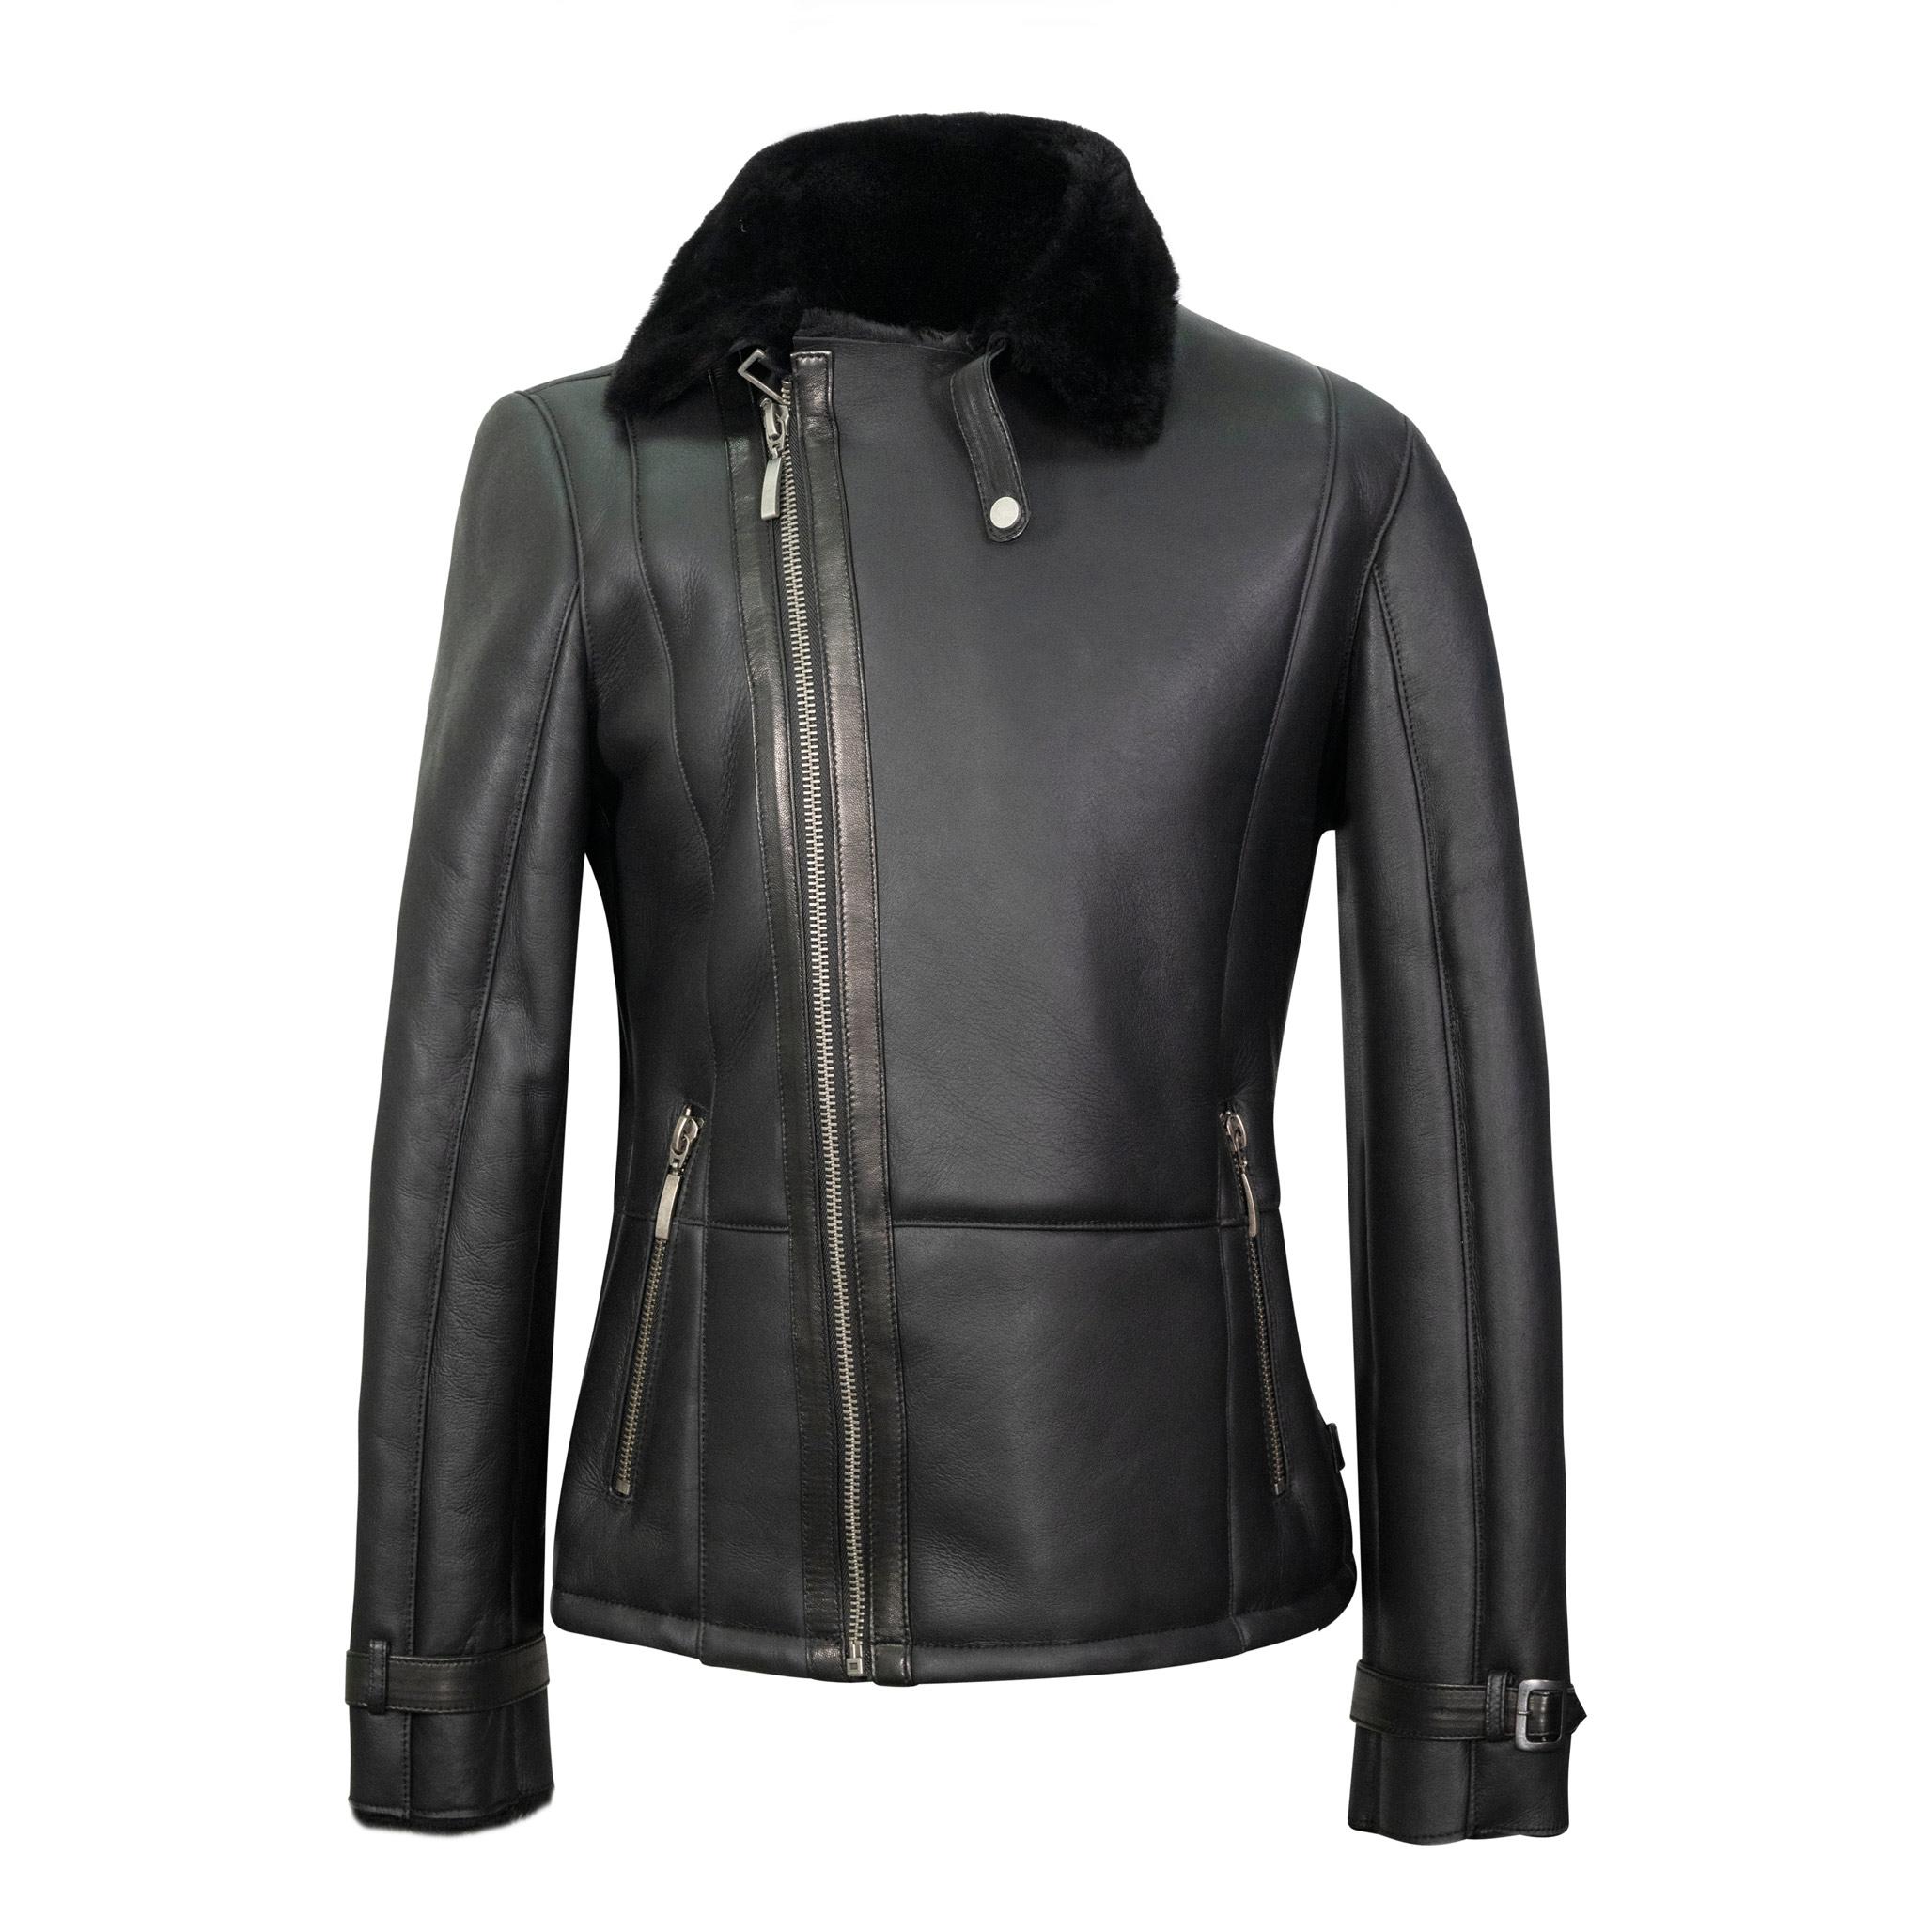 A sleek black sheepskin biker jacket.